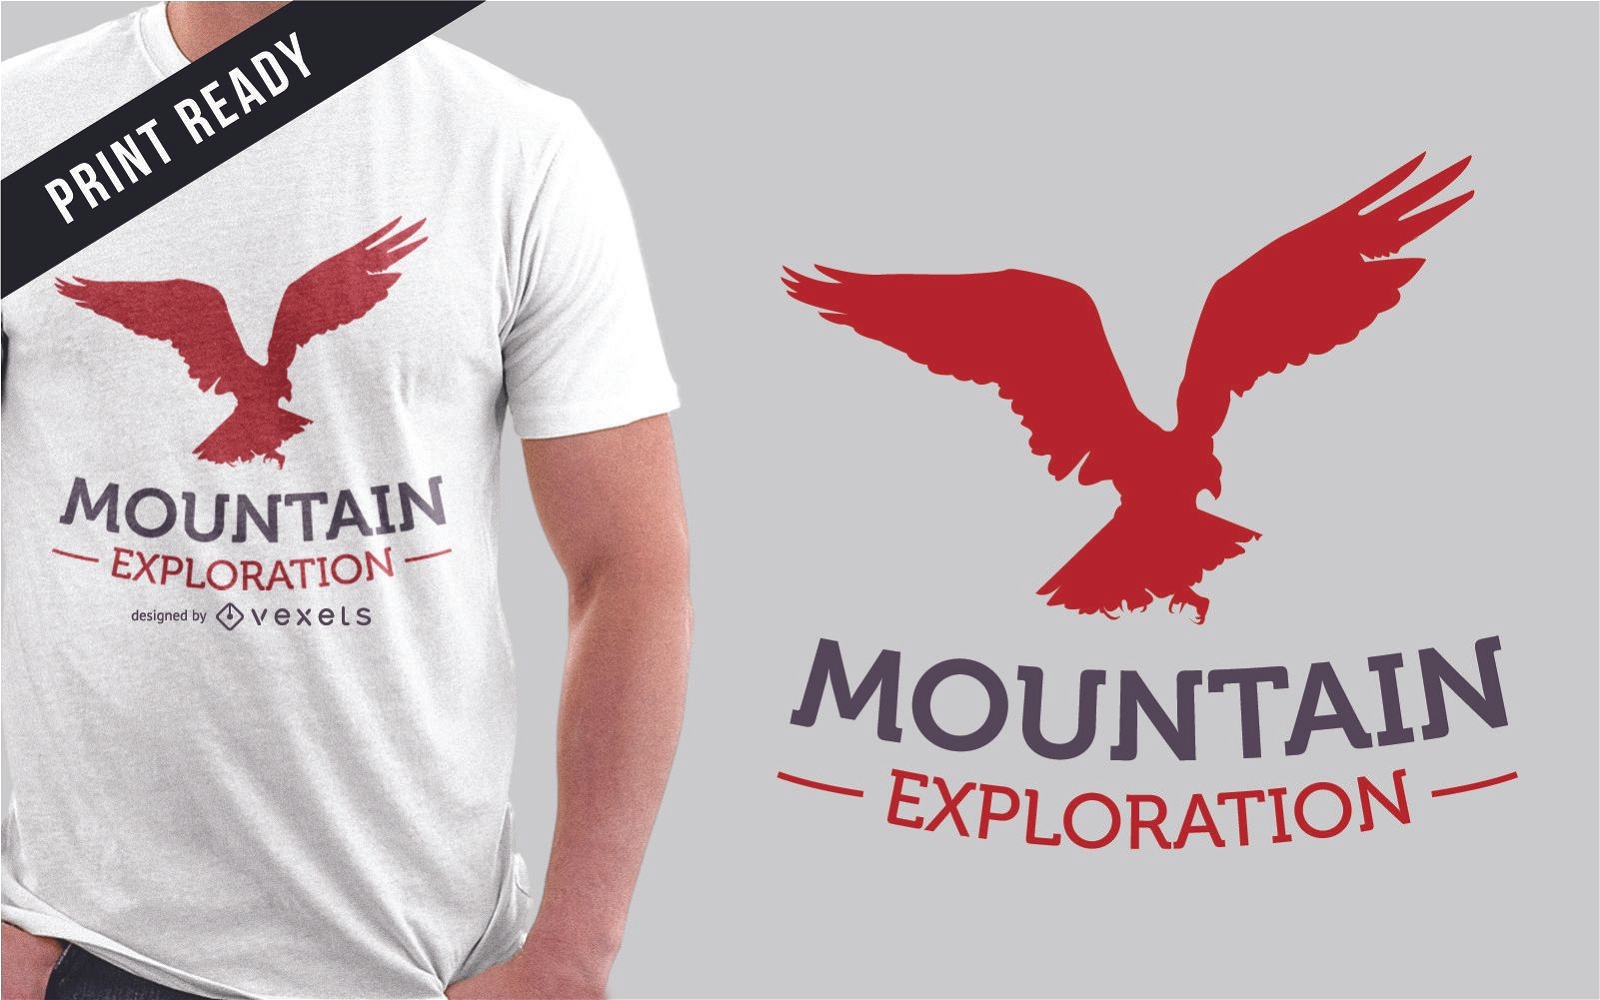 Mountain exploration t-shirt design